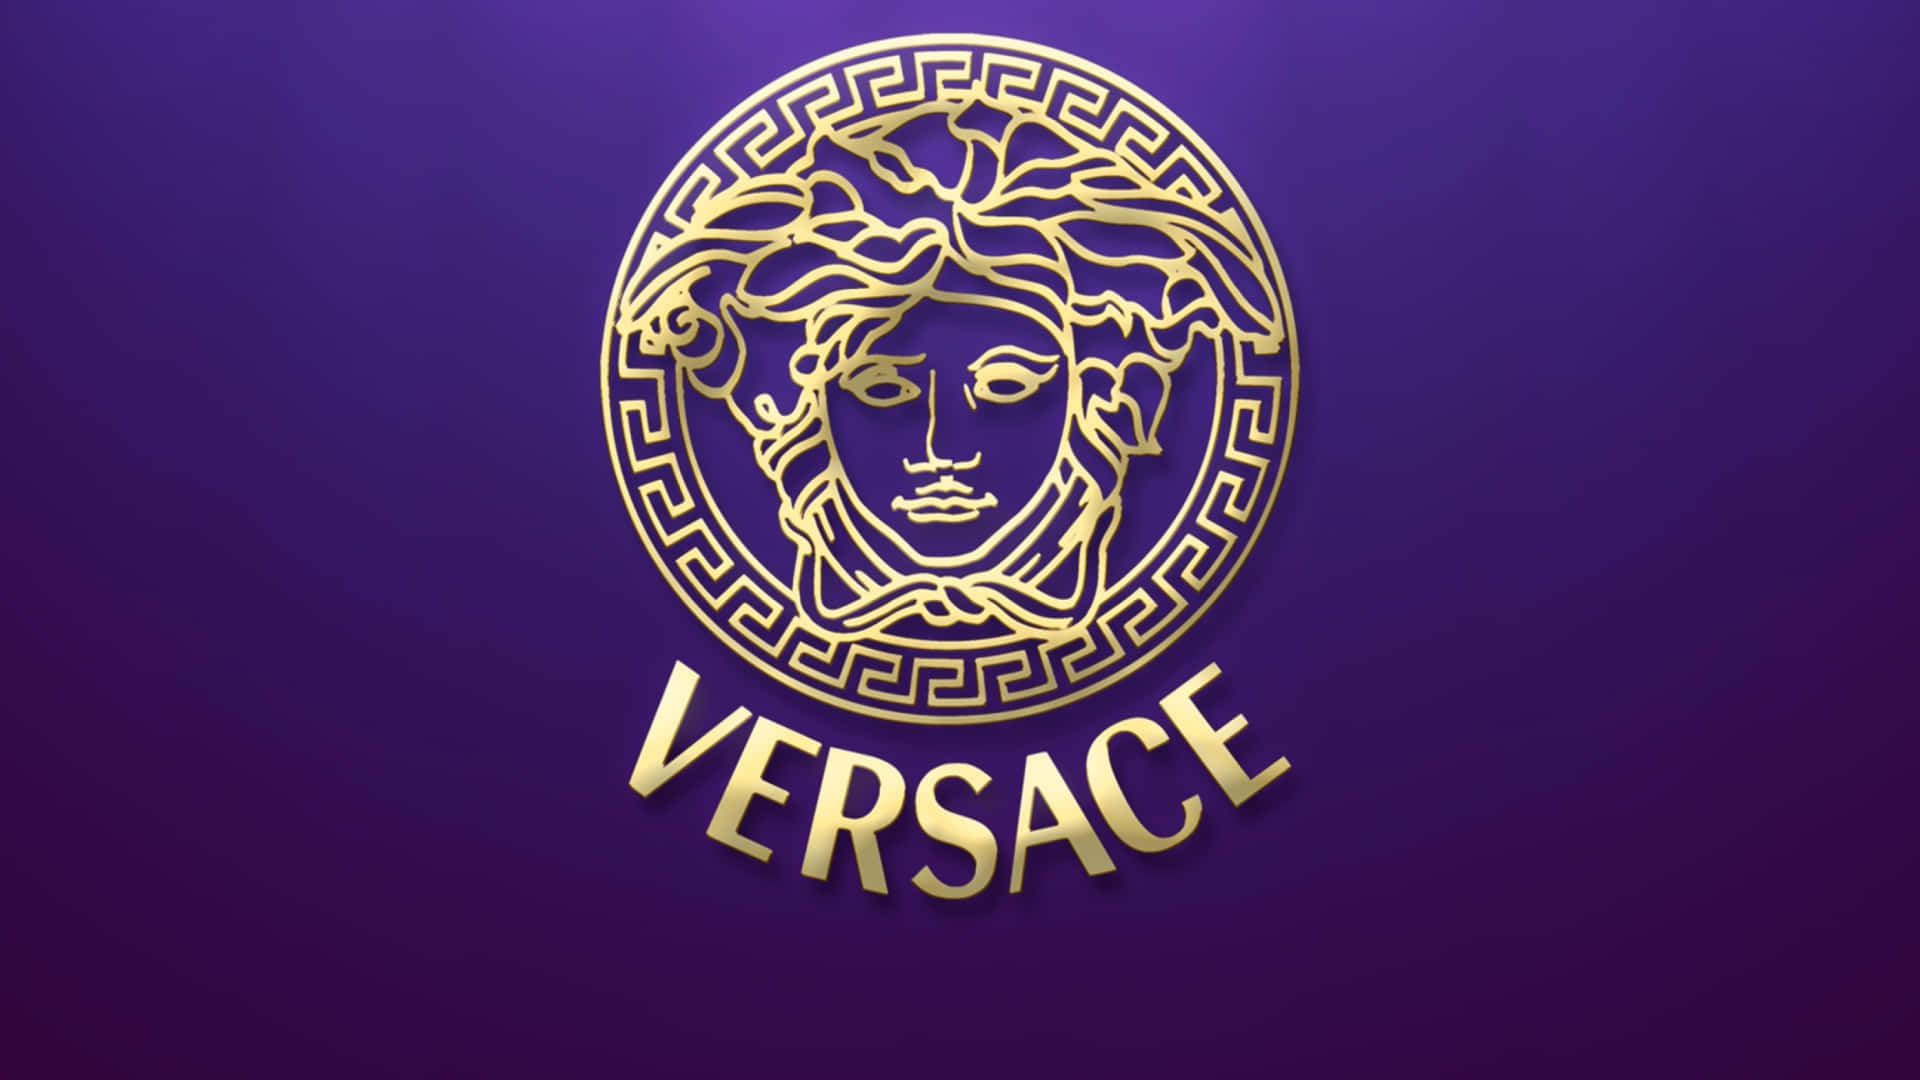 Versace Logo On A Purple Background Wallpaper